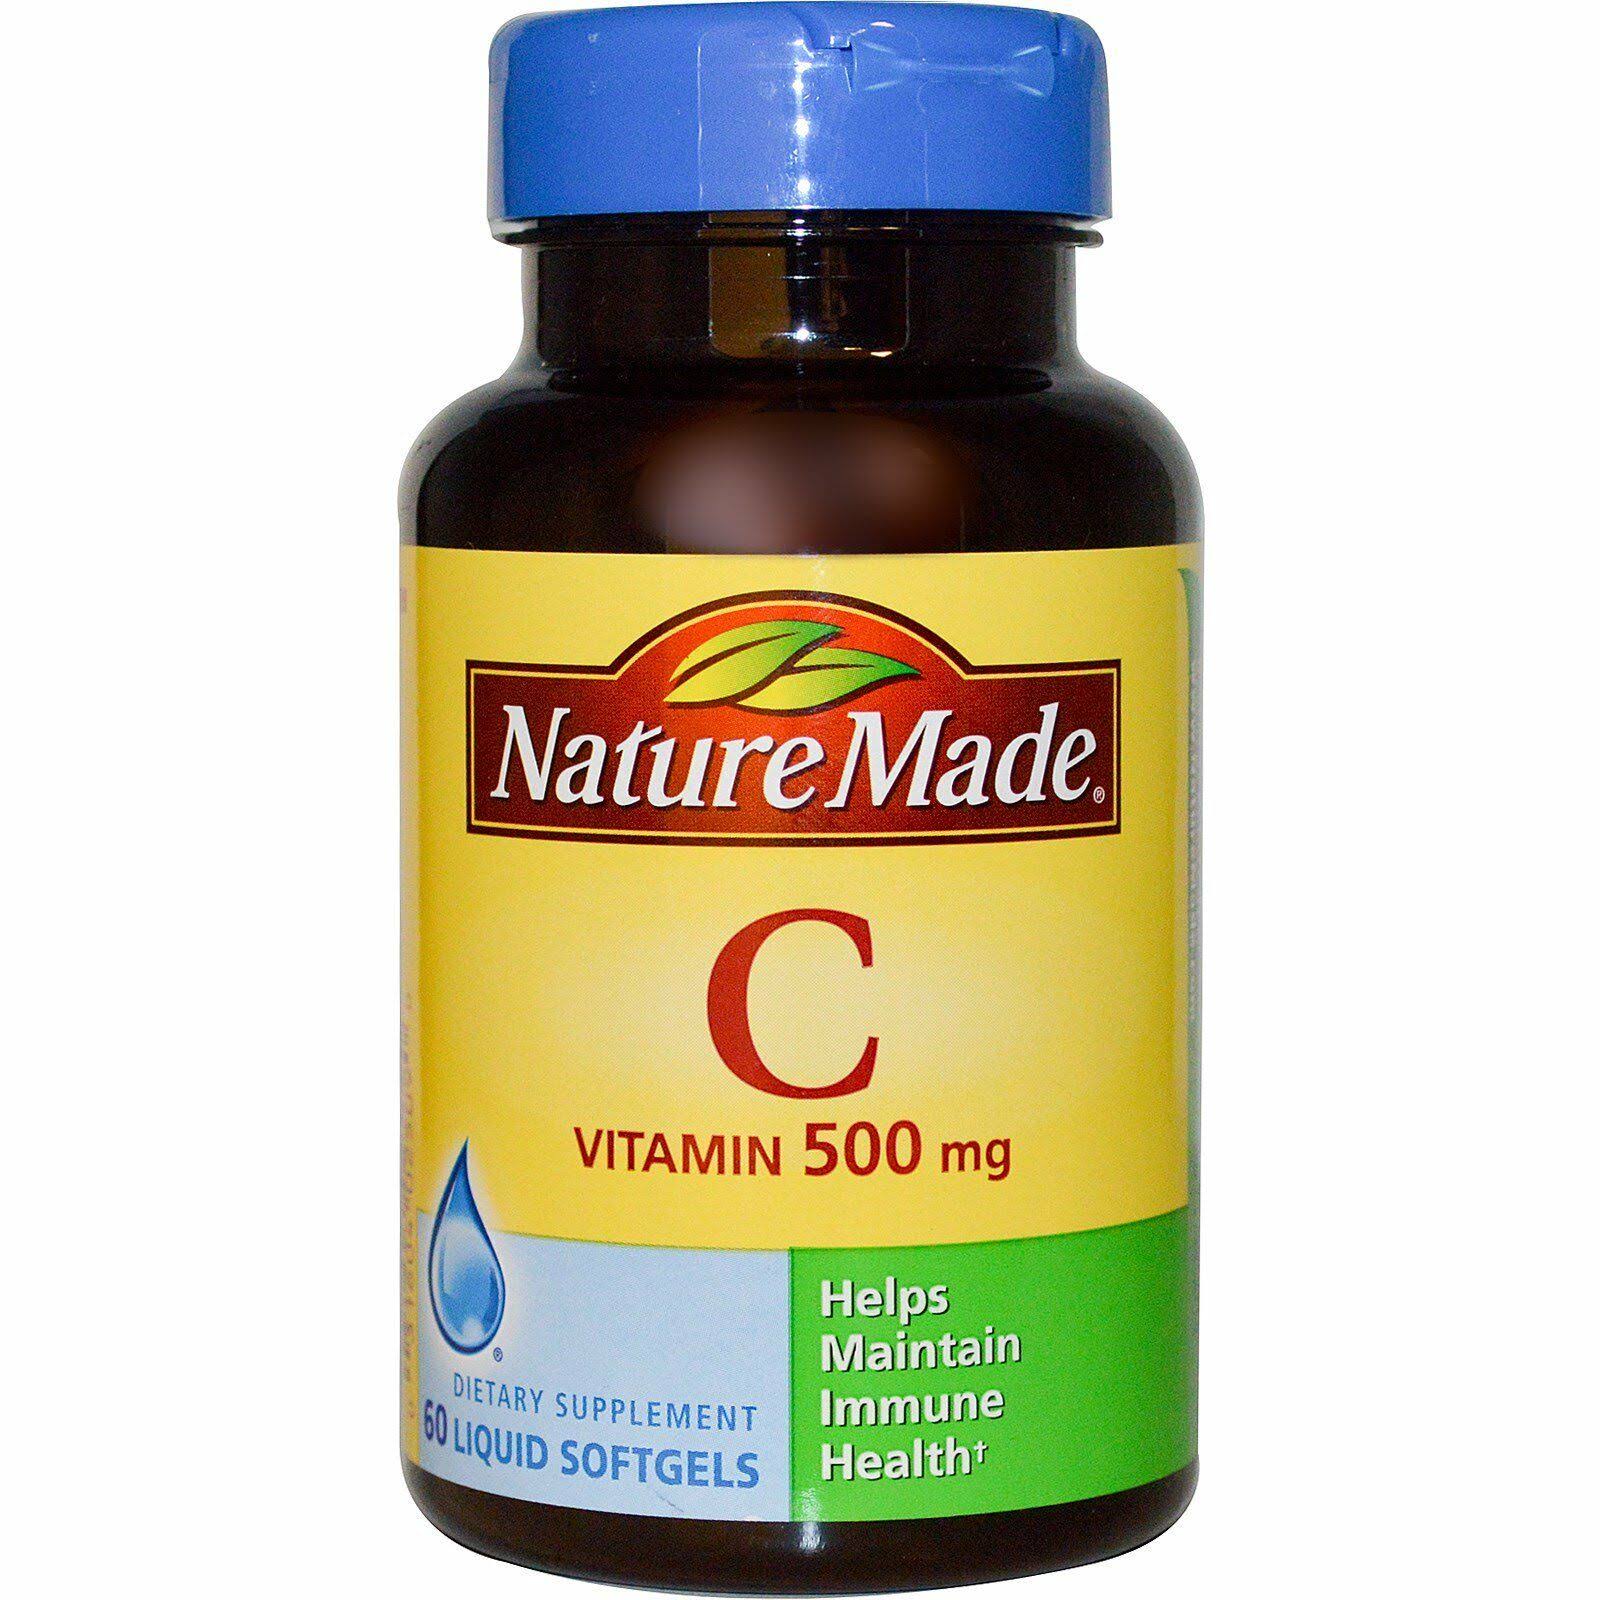 Nature Made Vitamin C Softgel Supplement - 500mg, 60ct